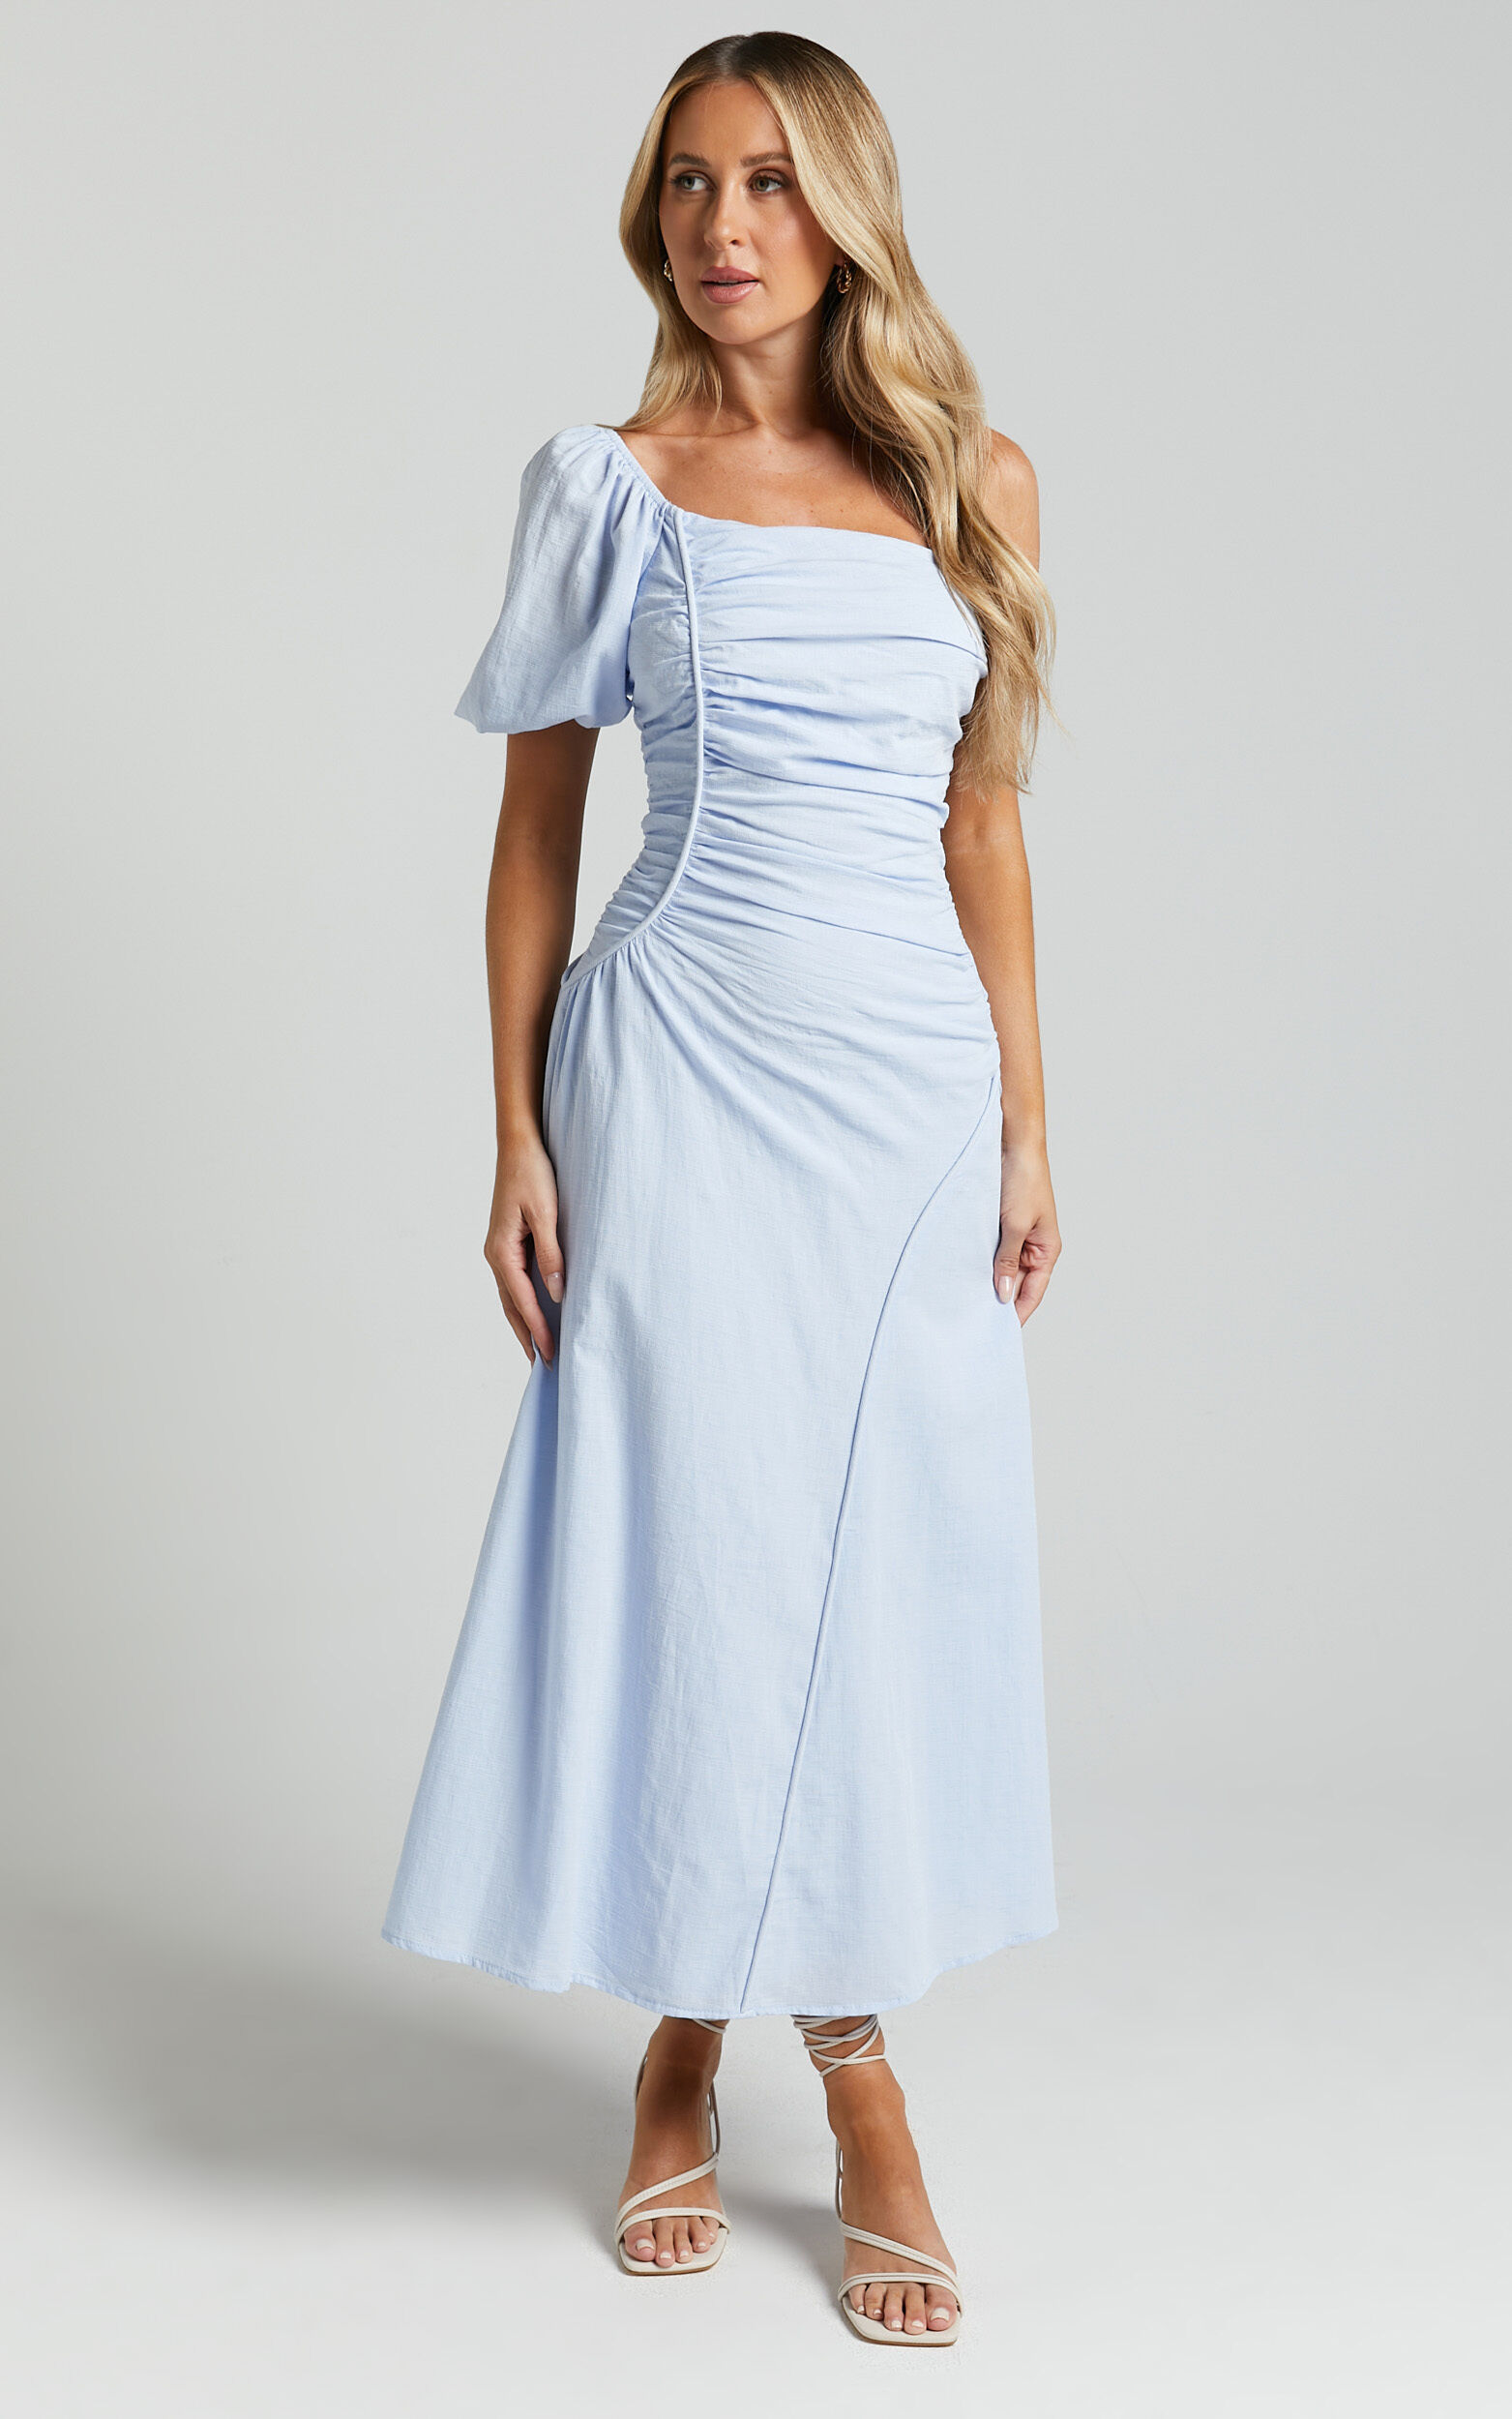 Menceth Midi Dress - One Shoulder Puff Sleeve Ruched Dress in Blue - 06, BLU1